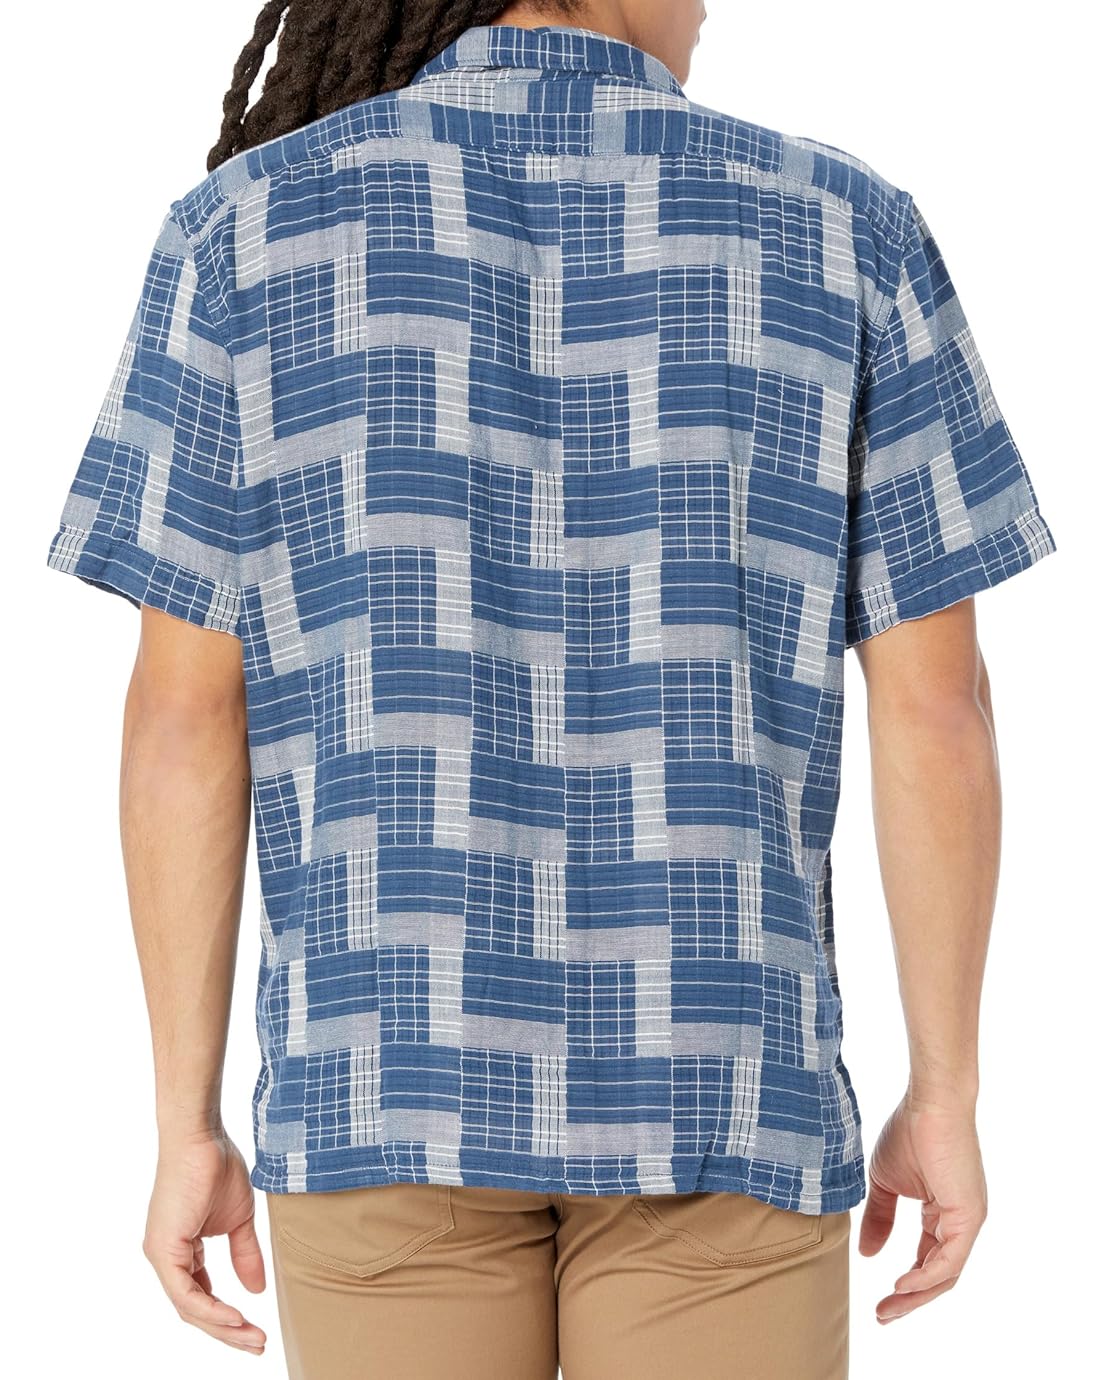  Levis Premium The Sunset Camp Shirt